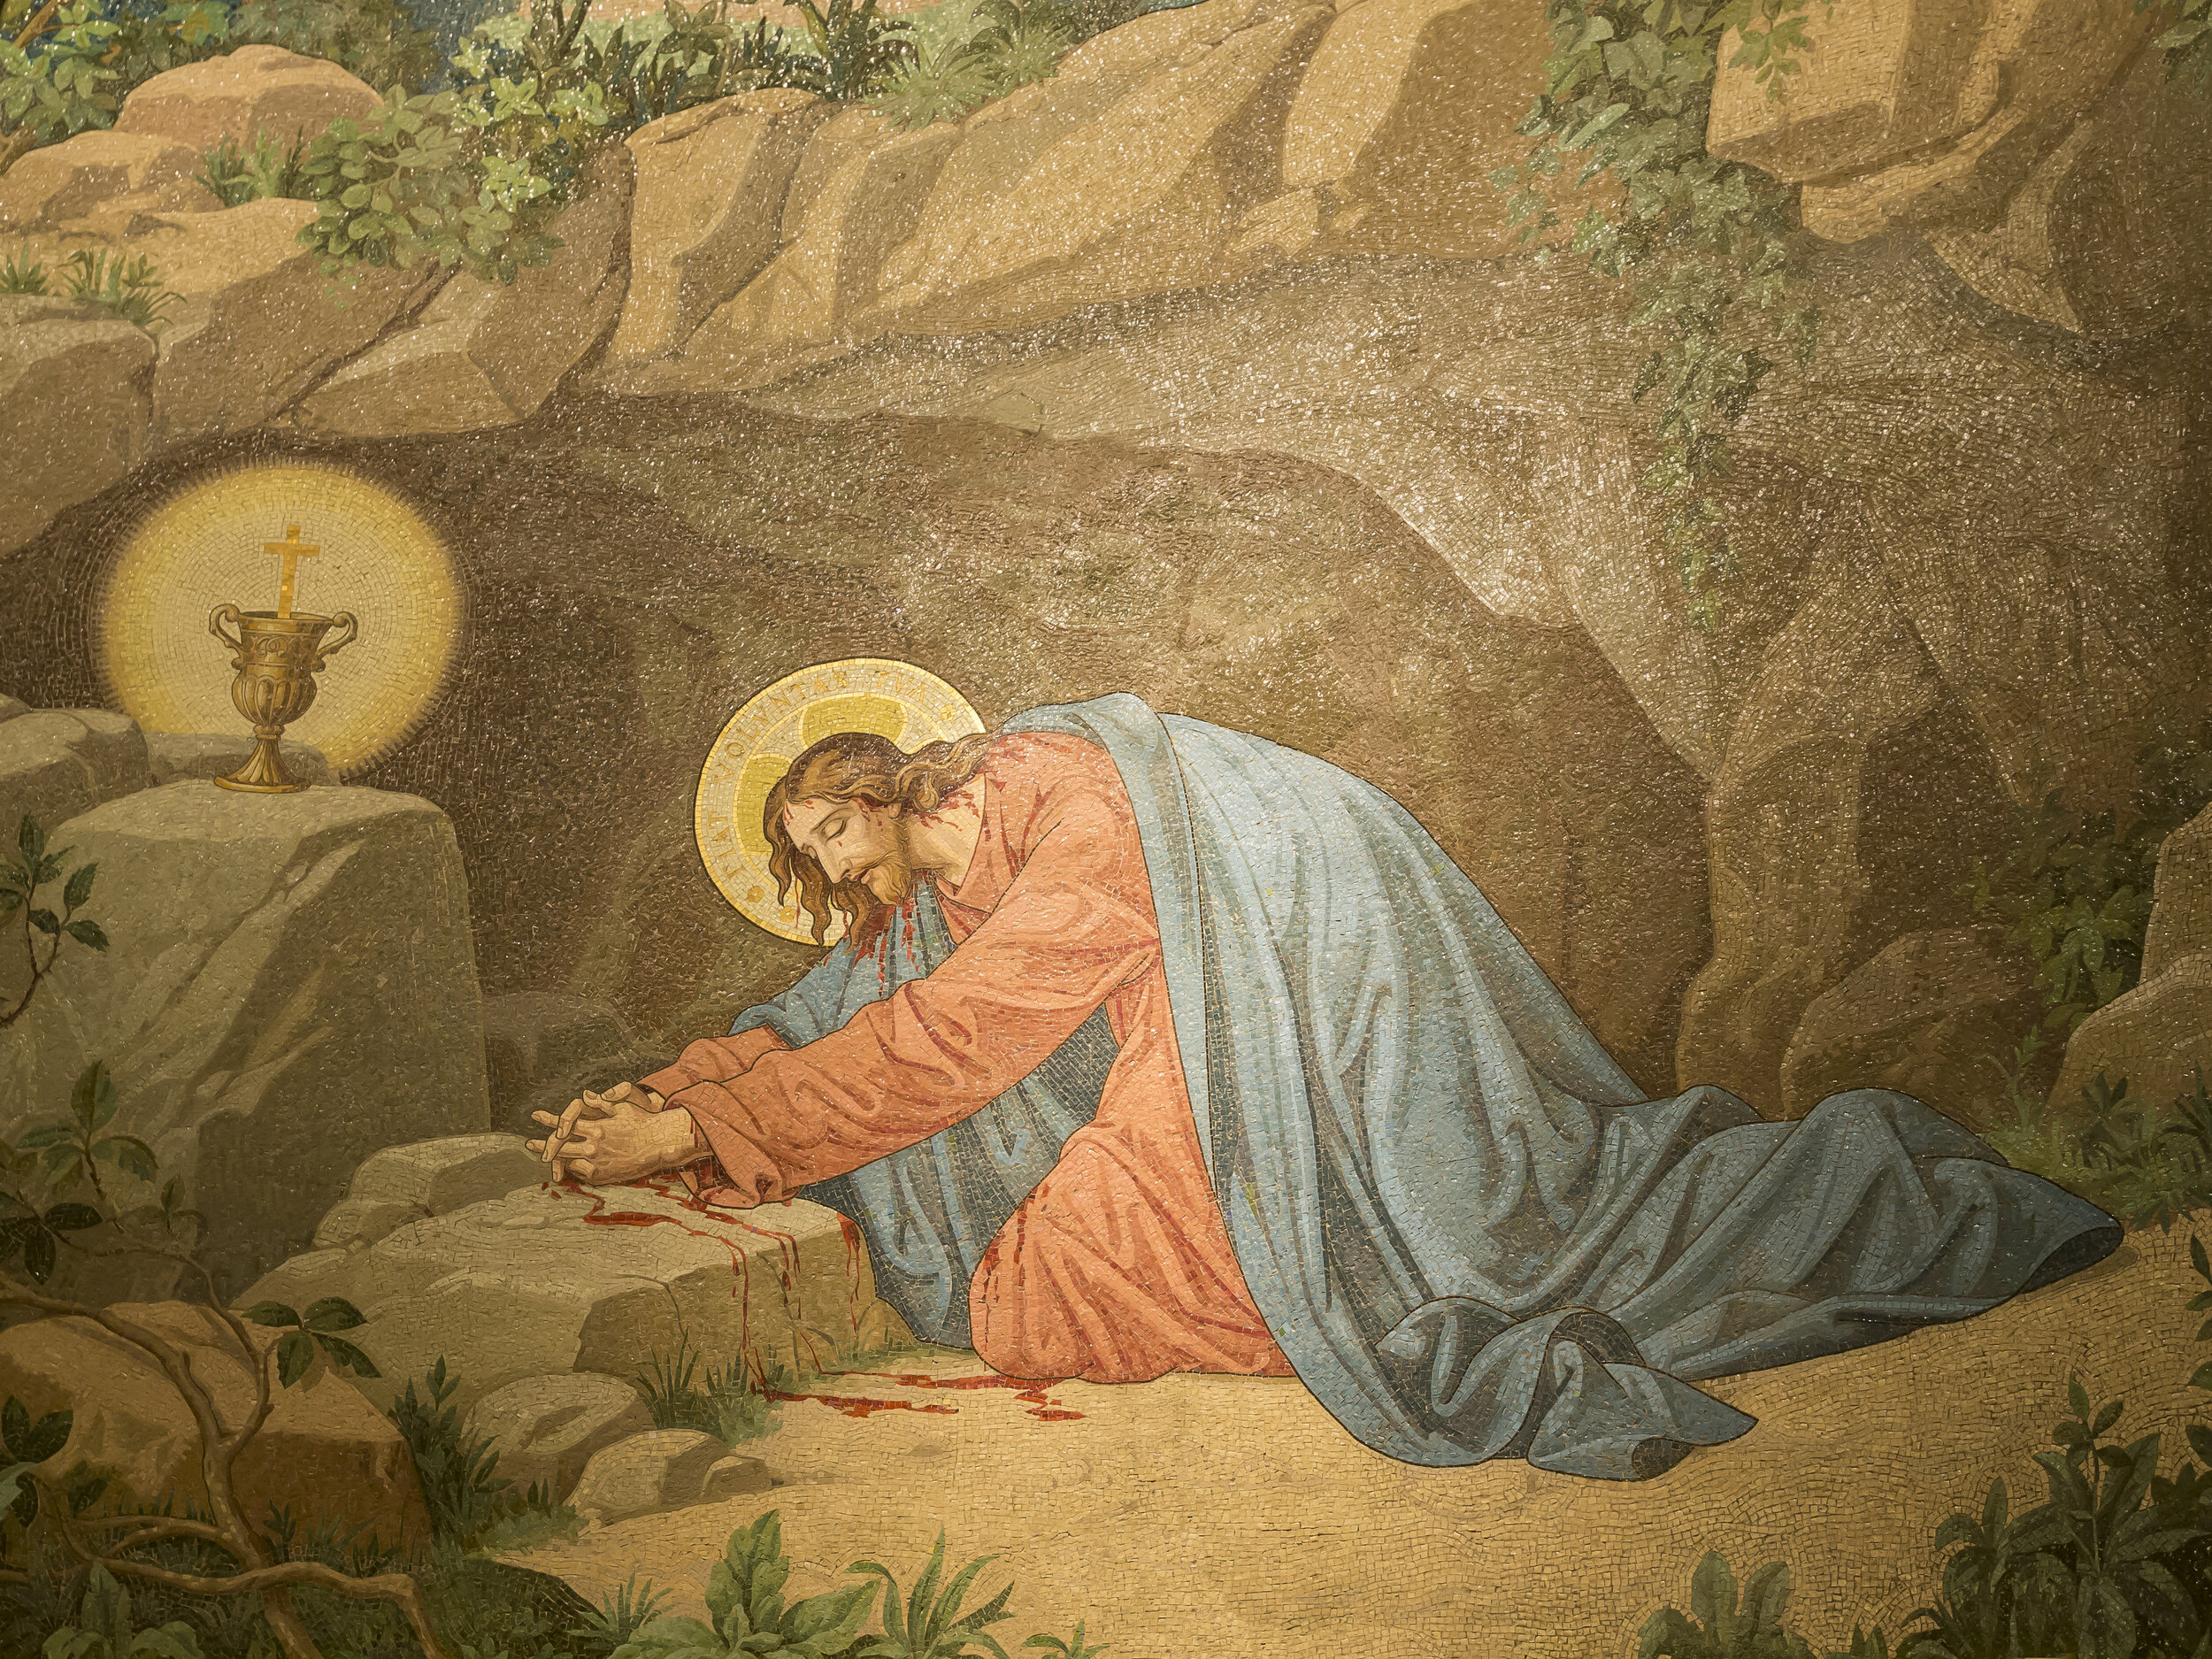 What Happened In The Garden Of Gethsemane